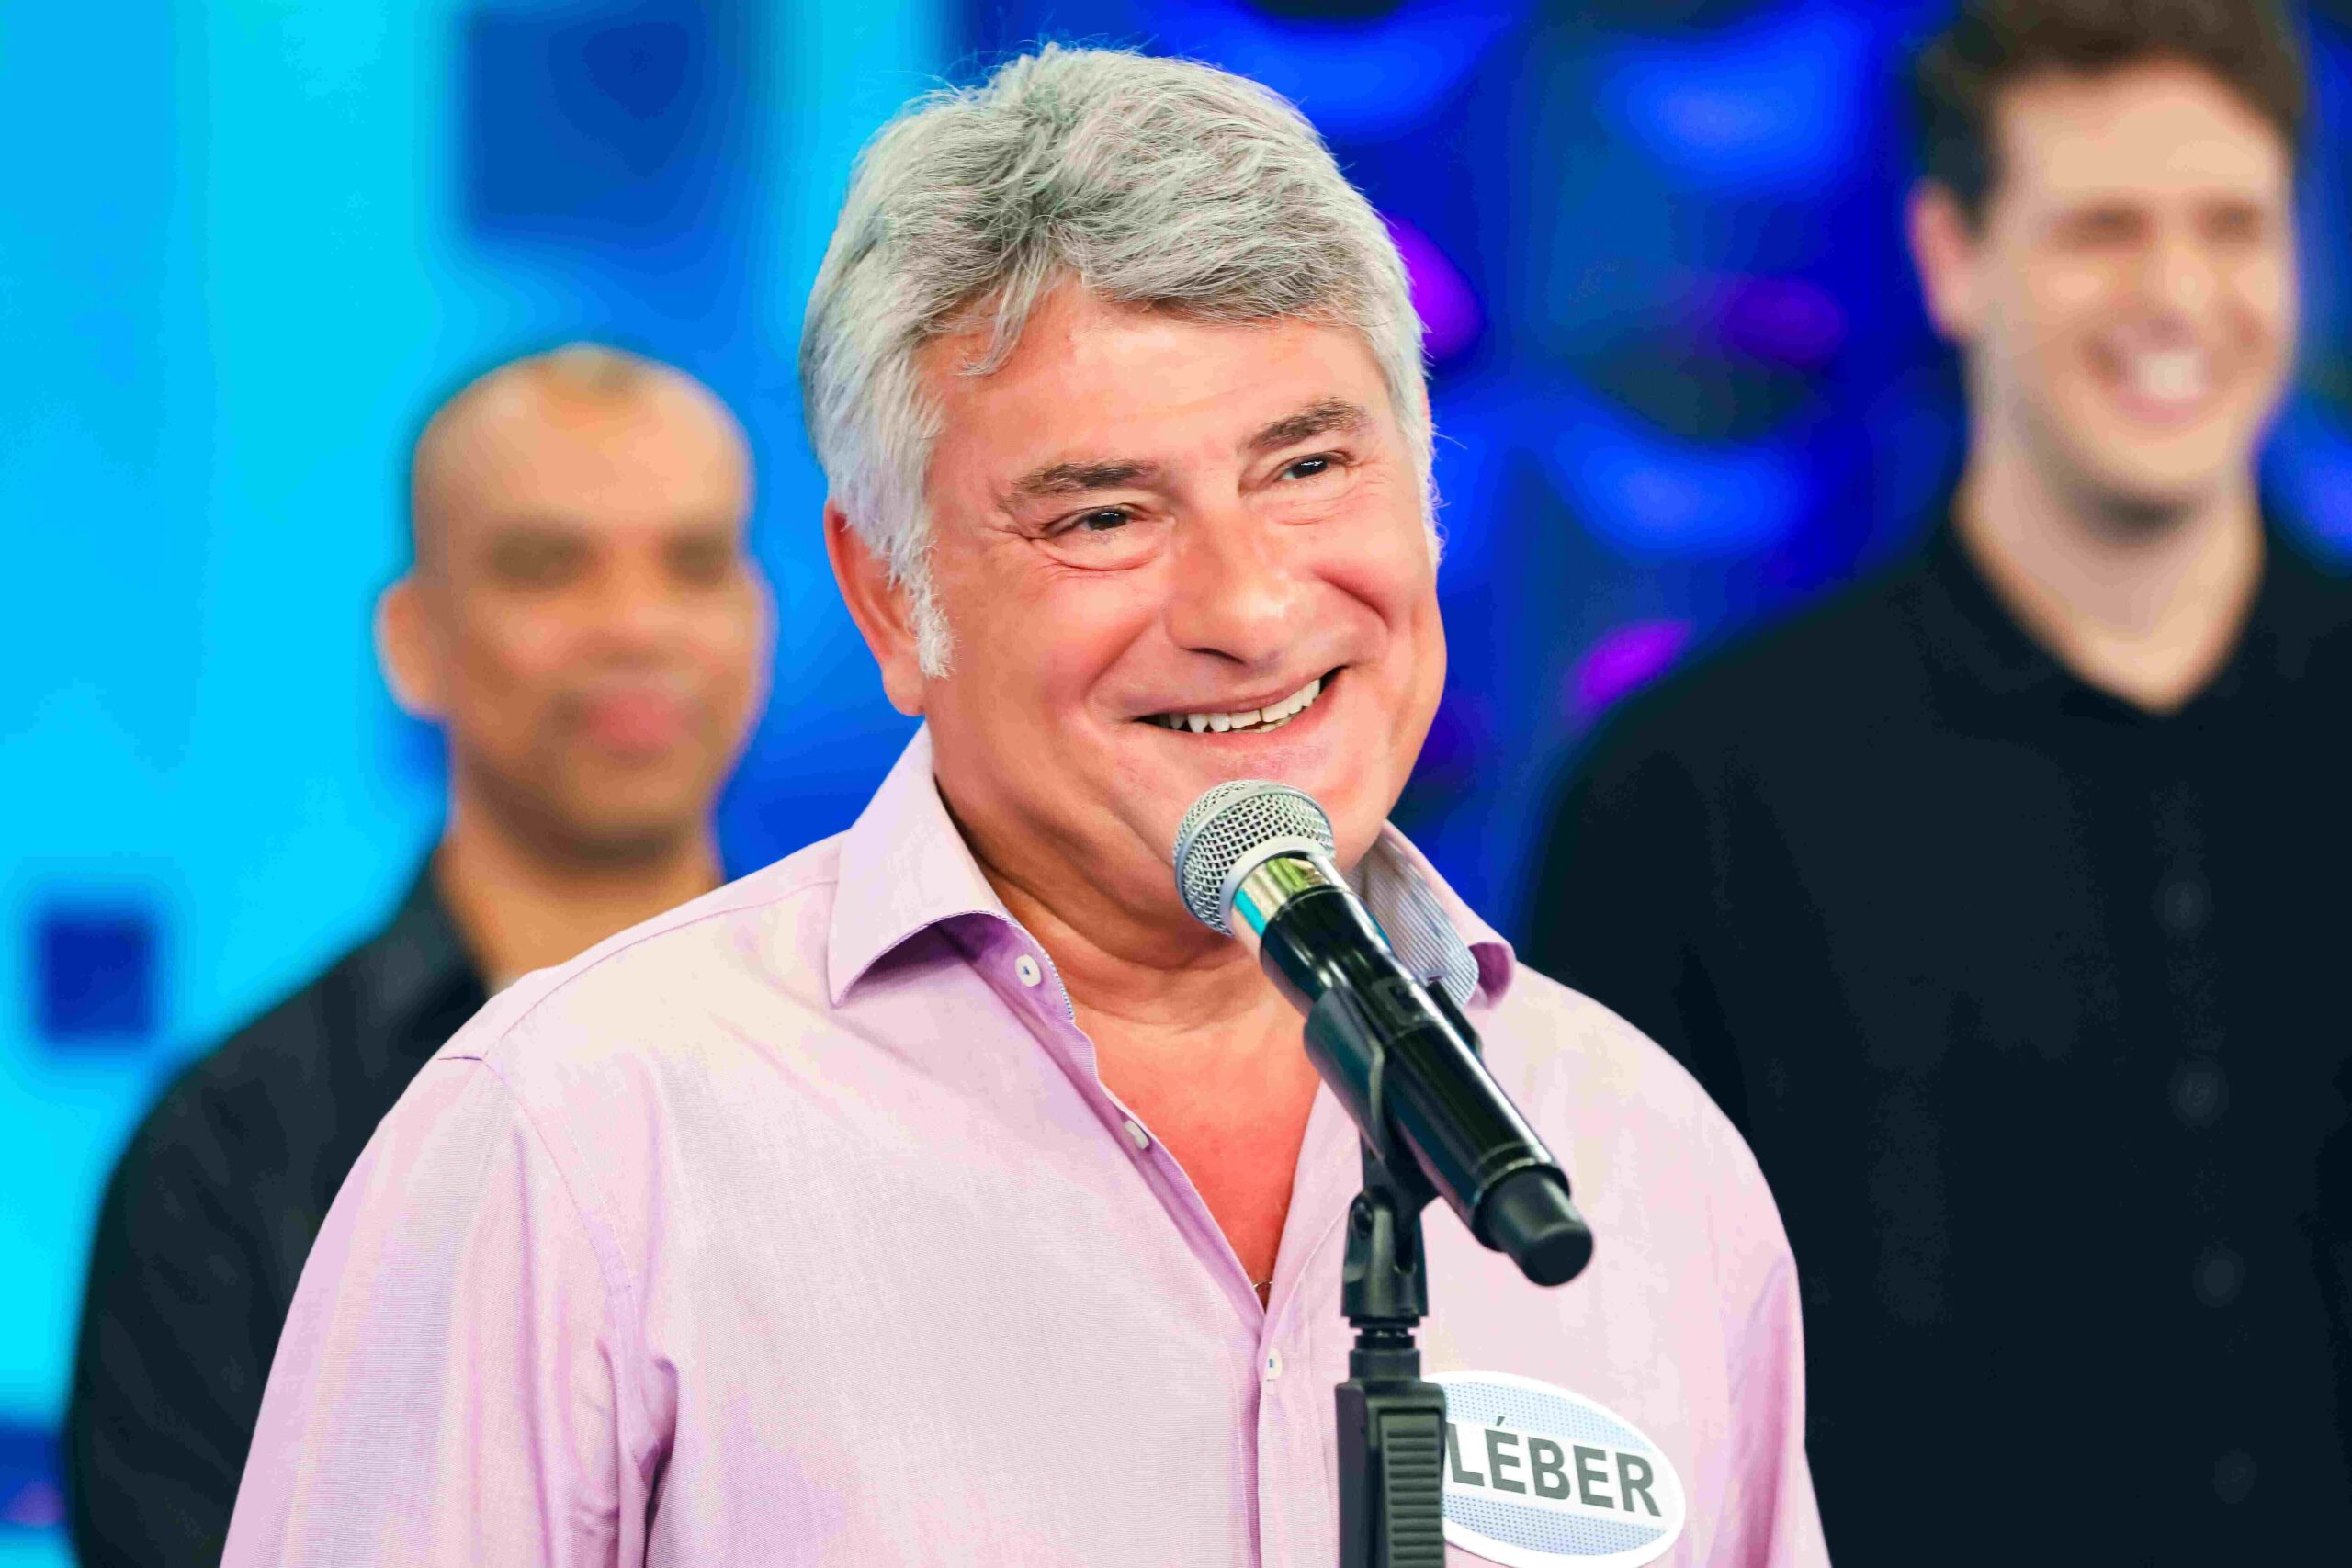 Demitido ha 6 meses da TV Globo Cleber Machado decide rumo na TV scaled